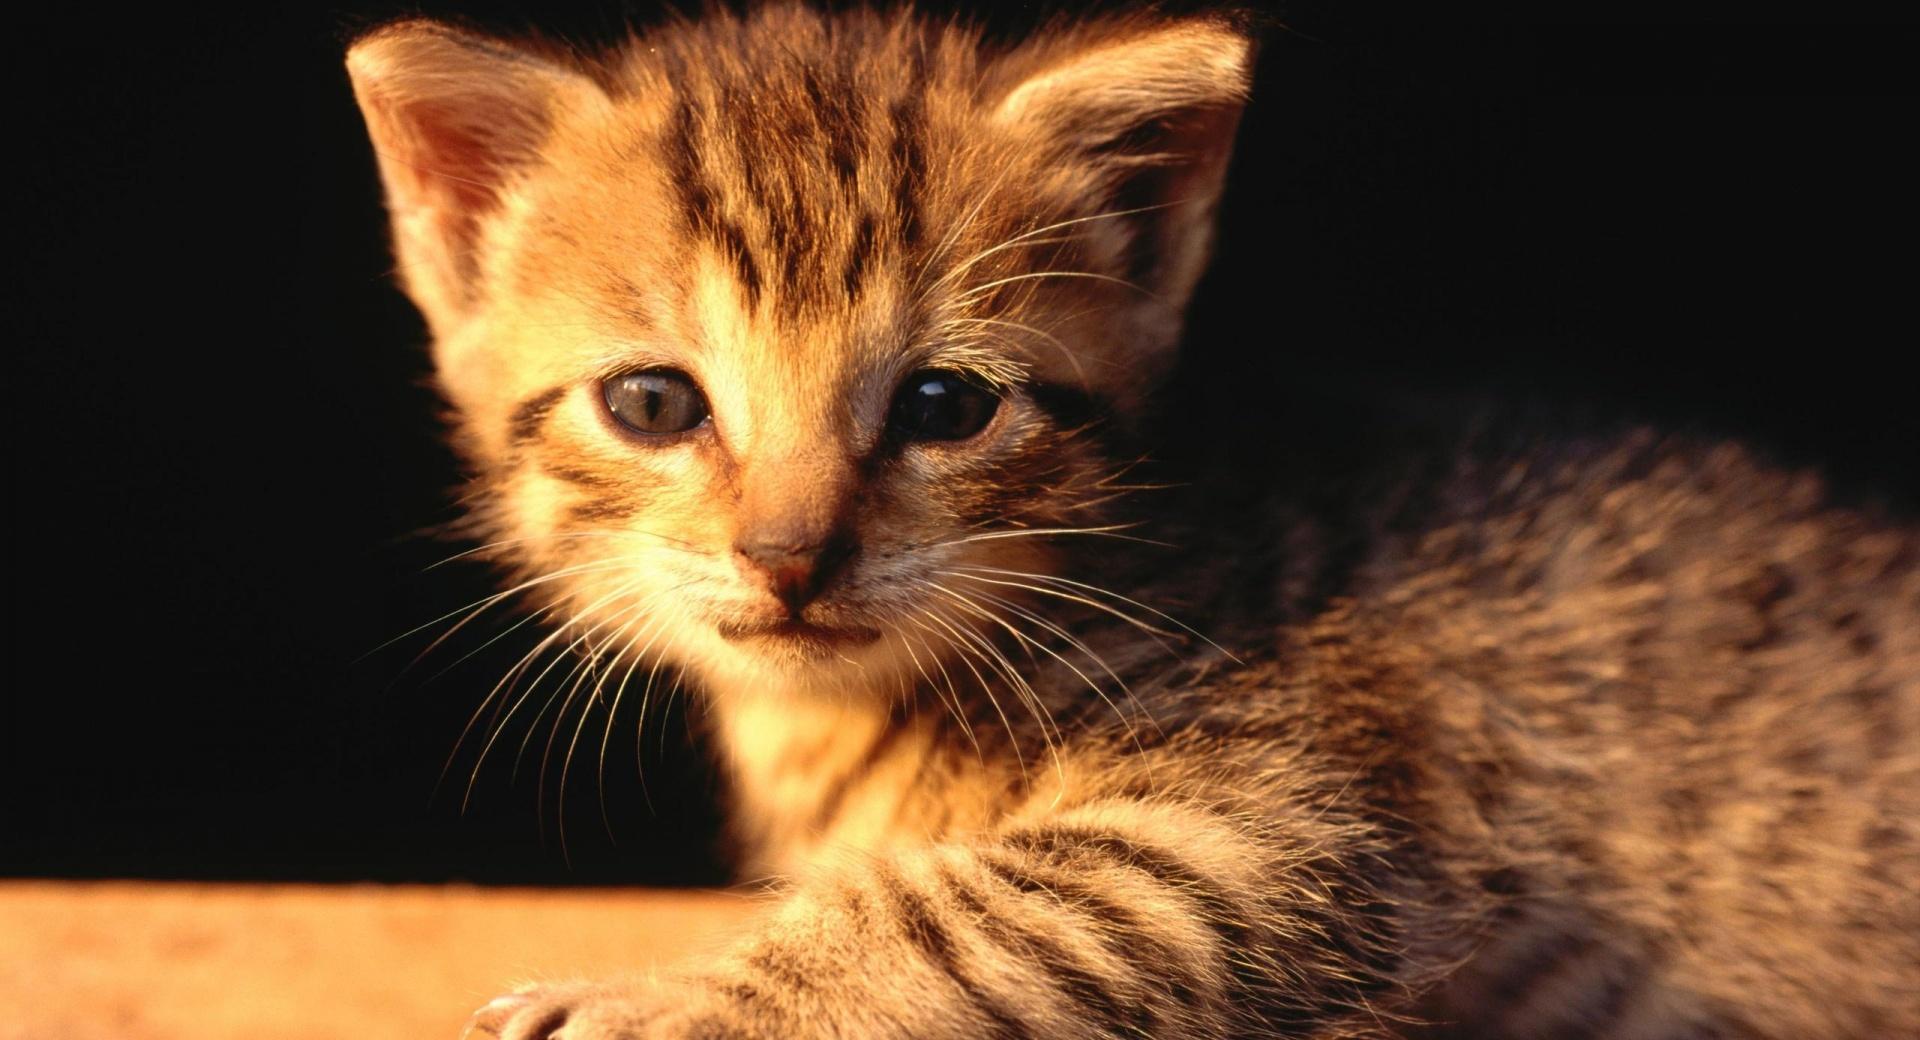 Newborn Tabby Kitten wallpapers HD quality